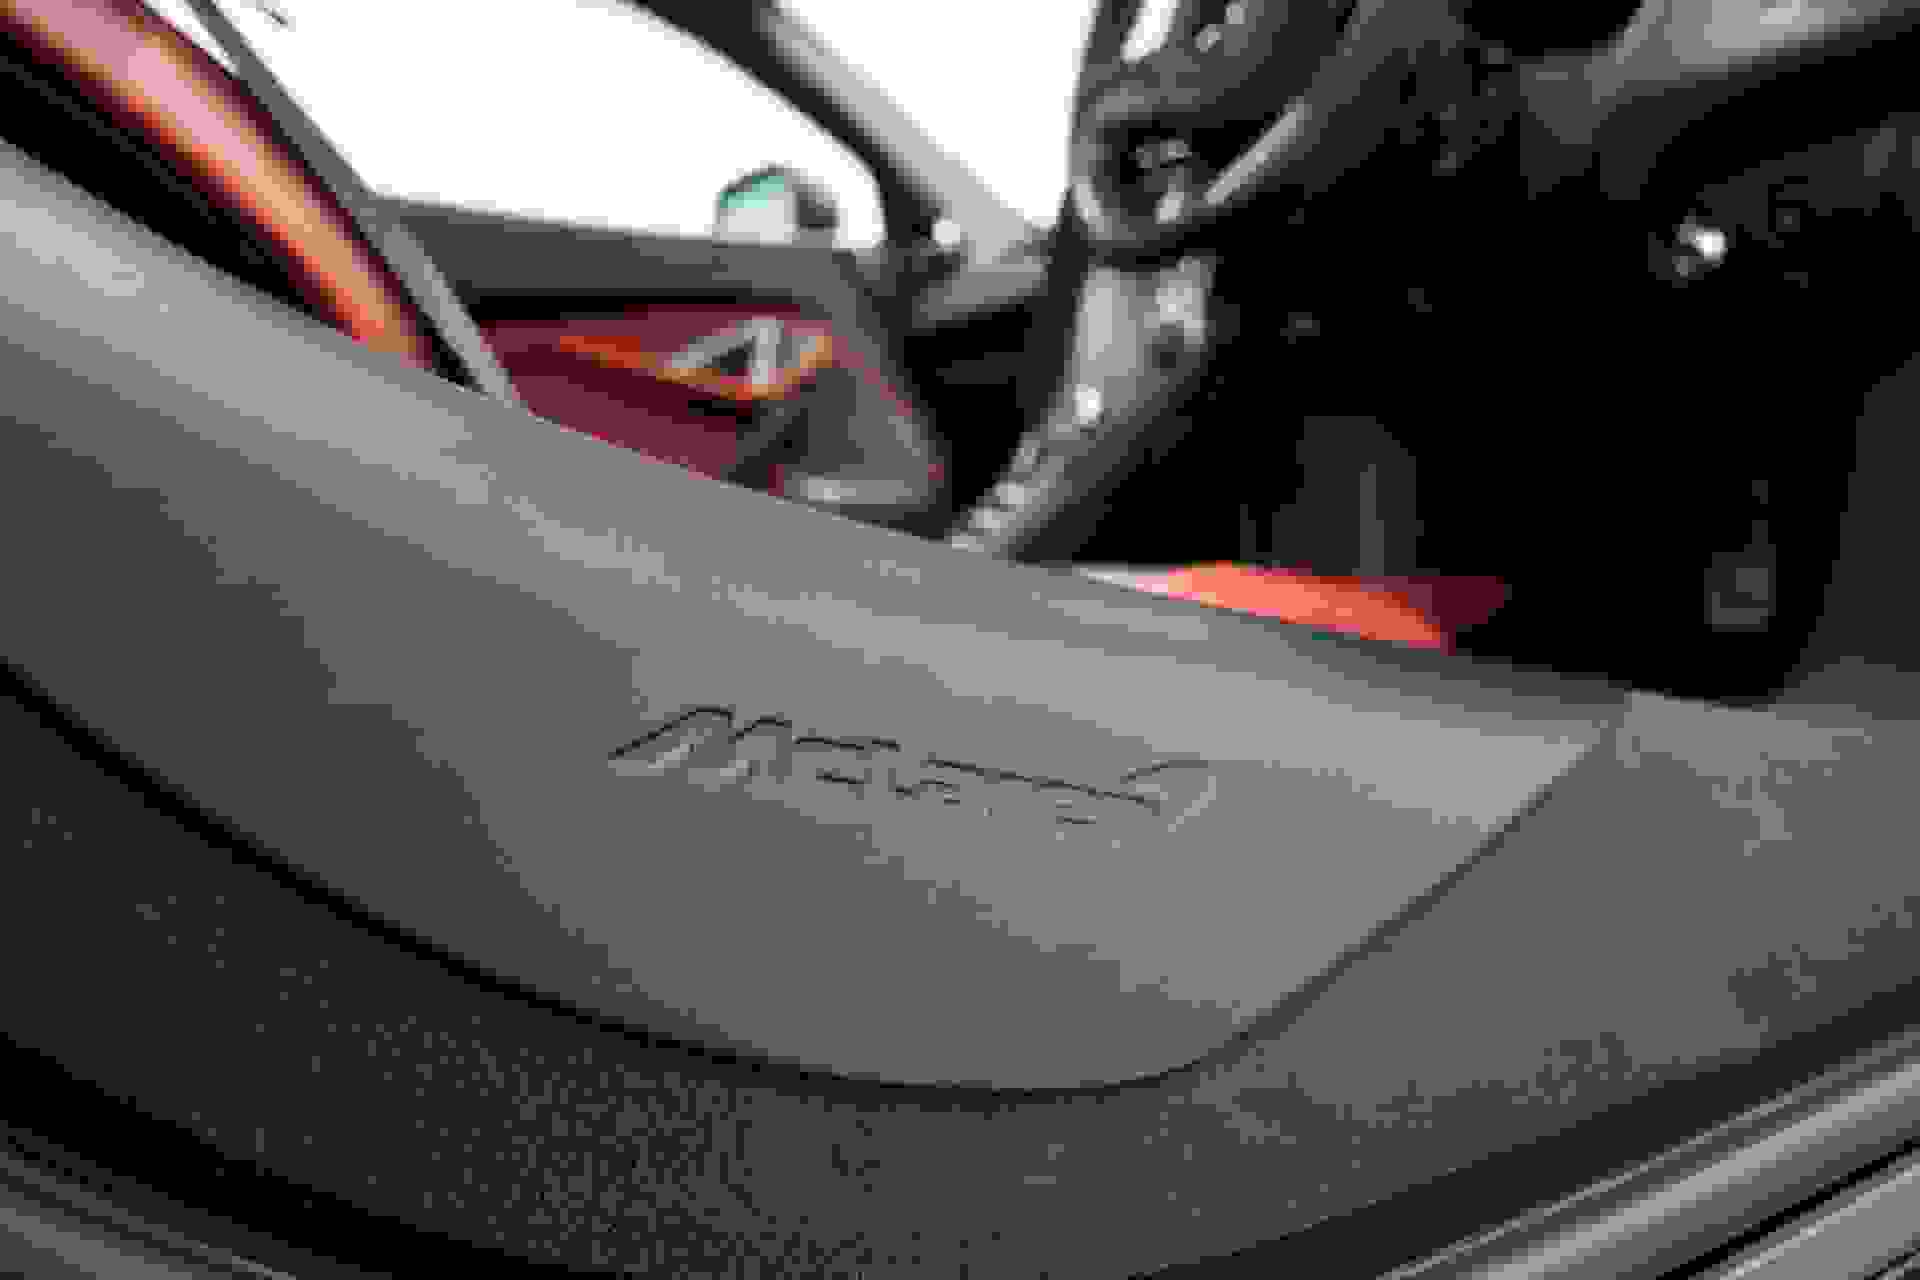 McLaren 720S Photo 61651806-4e1c-4af3-9b23-6fdfcf1bc72a.jpg